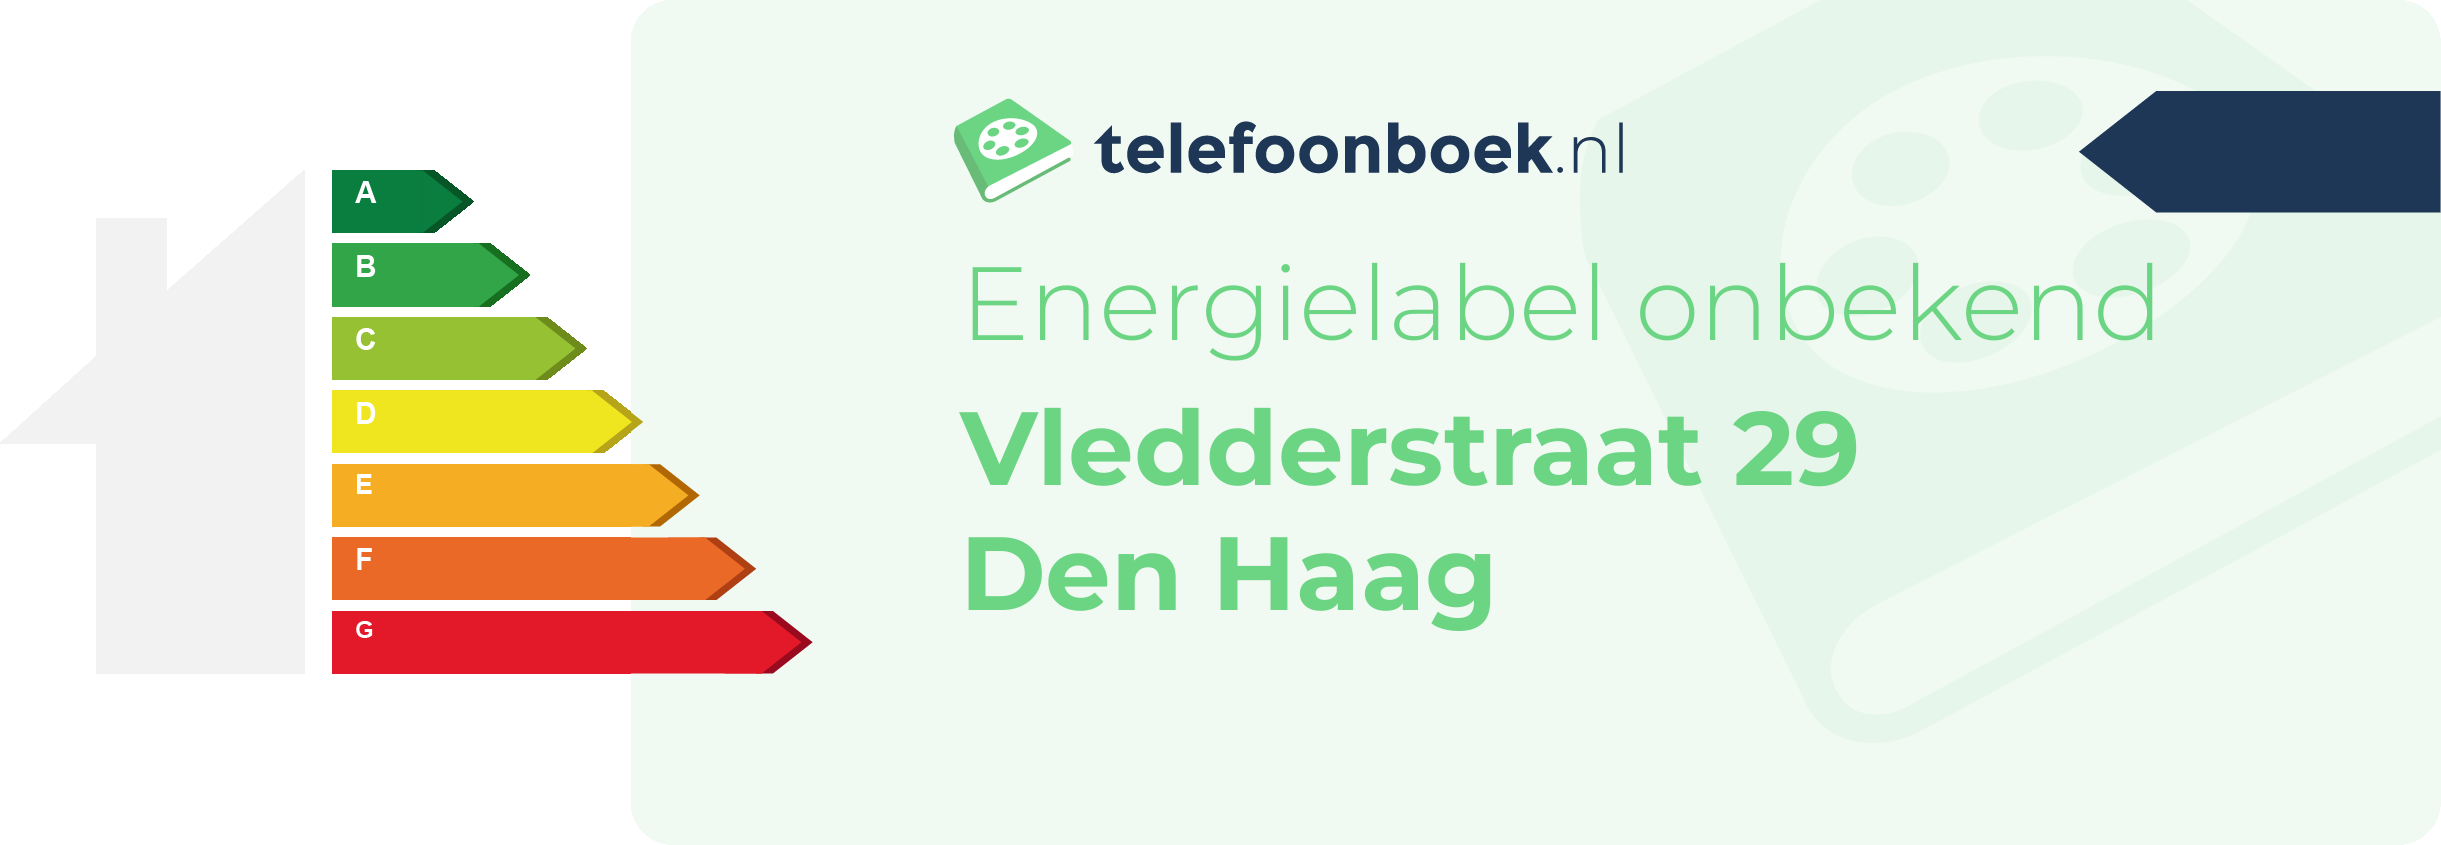 Energielabel Vledderstraat 29 Den Haag